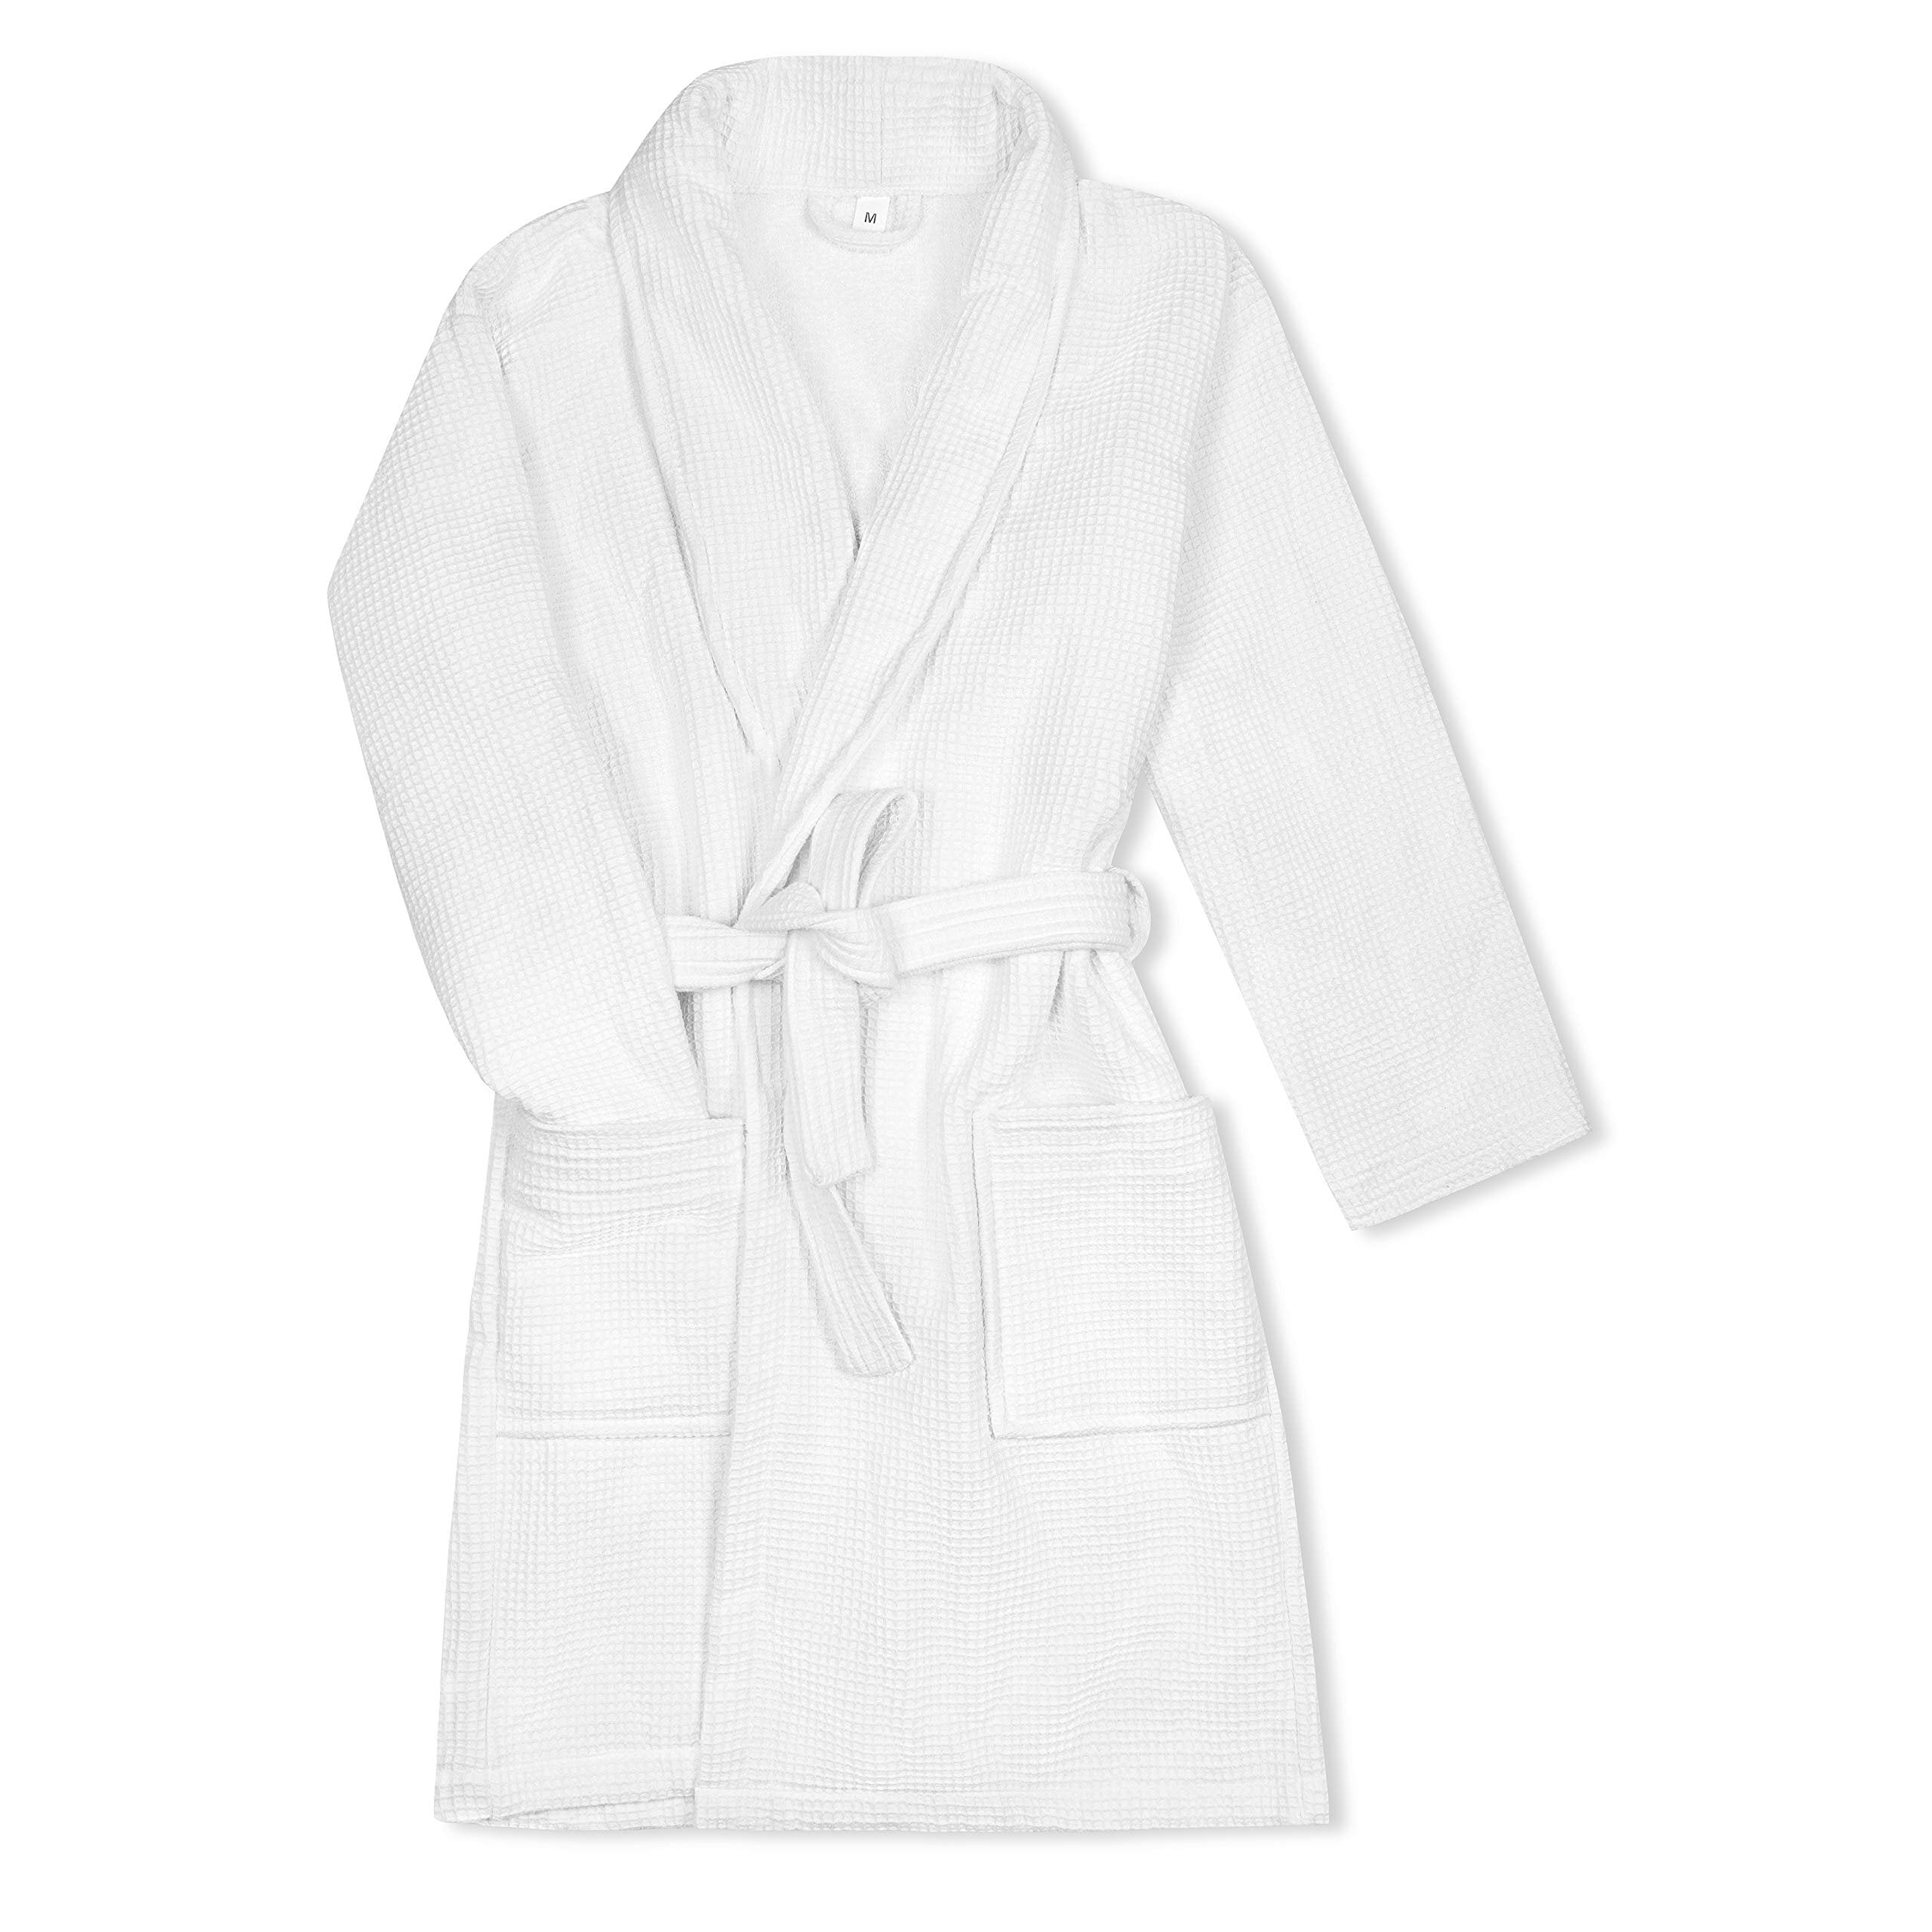 Free Shipping Luxury Spa Bathrobe - White Cotton Waffle/Terry Towel, Size L Unisex